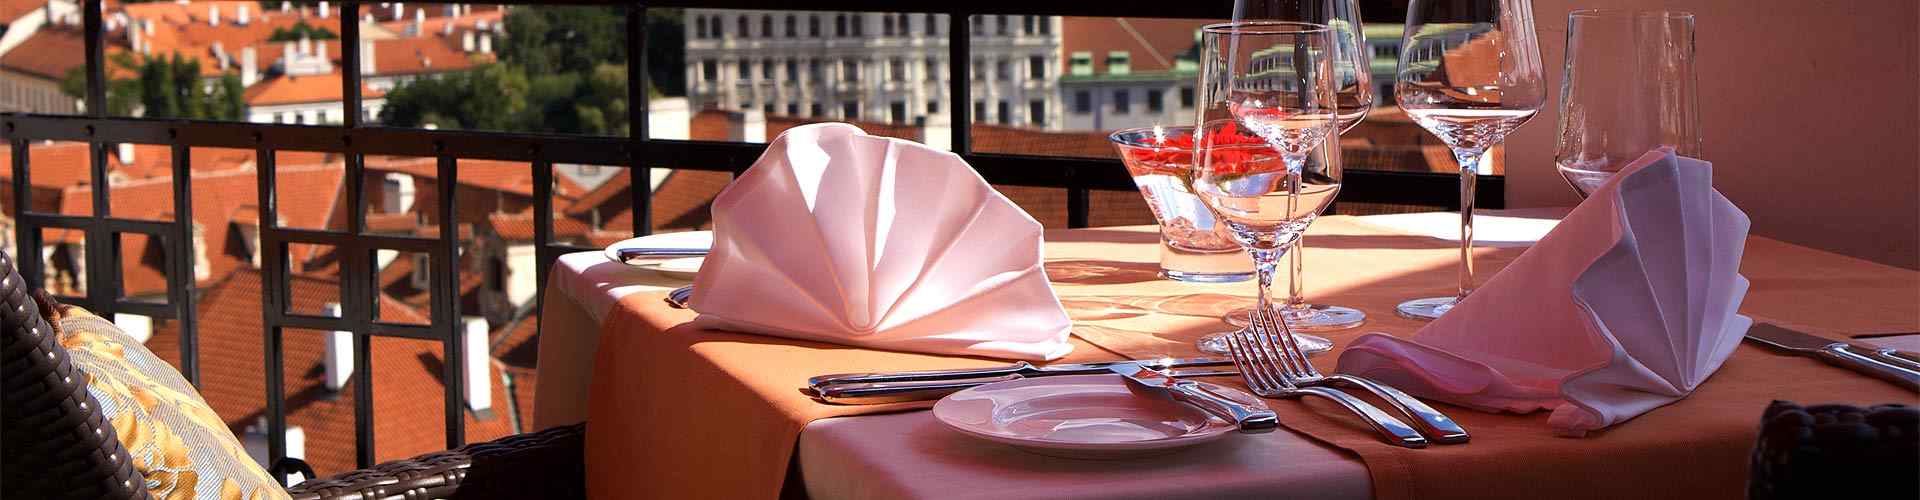 Restaurantes románticos con terraza en La Farga de Moles
          
          
